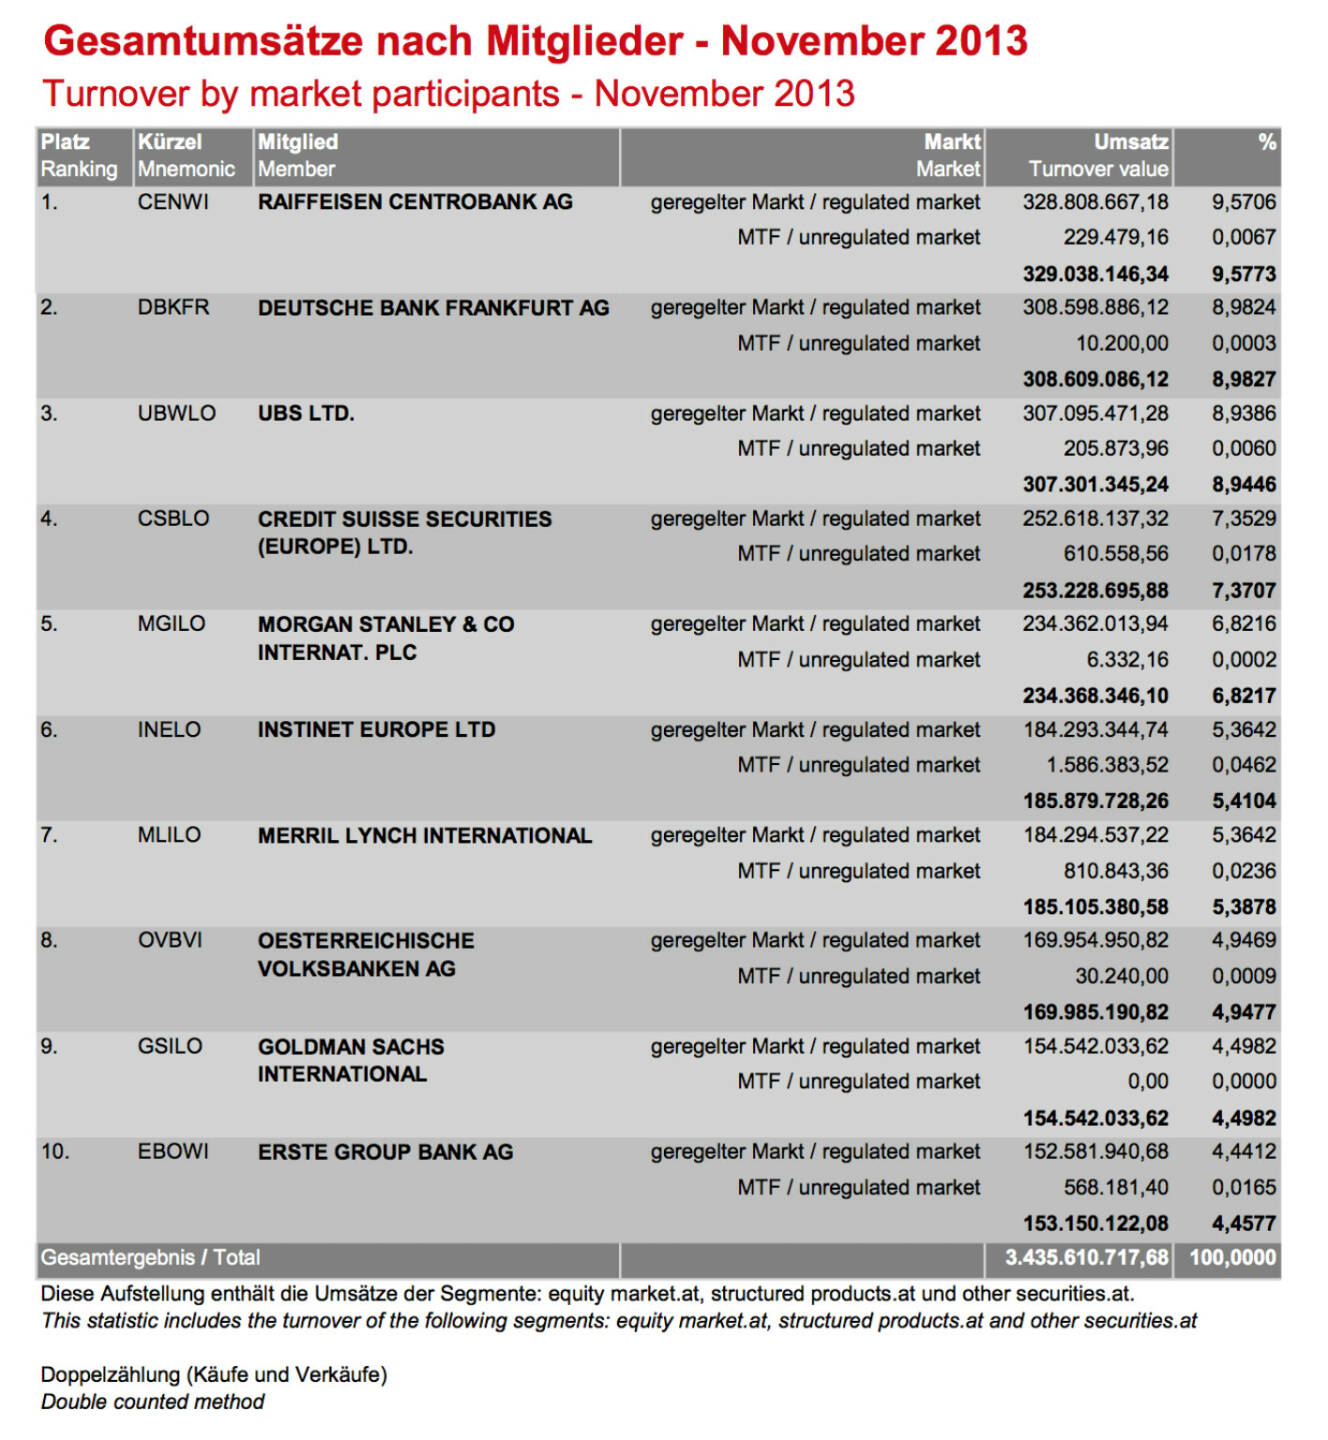 Wiener Börse: Gesamtumsätze Handelsmitglieder November 2013 (c) Wiener Börse